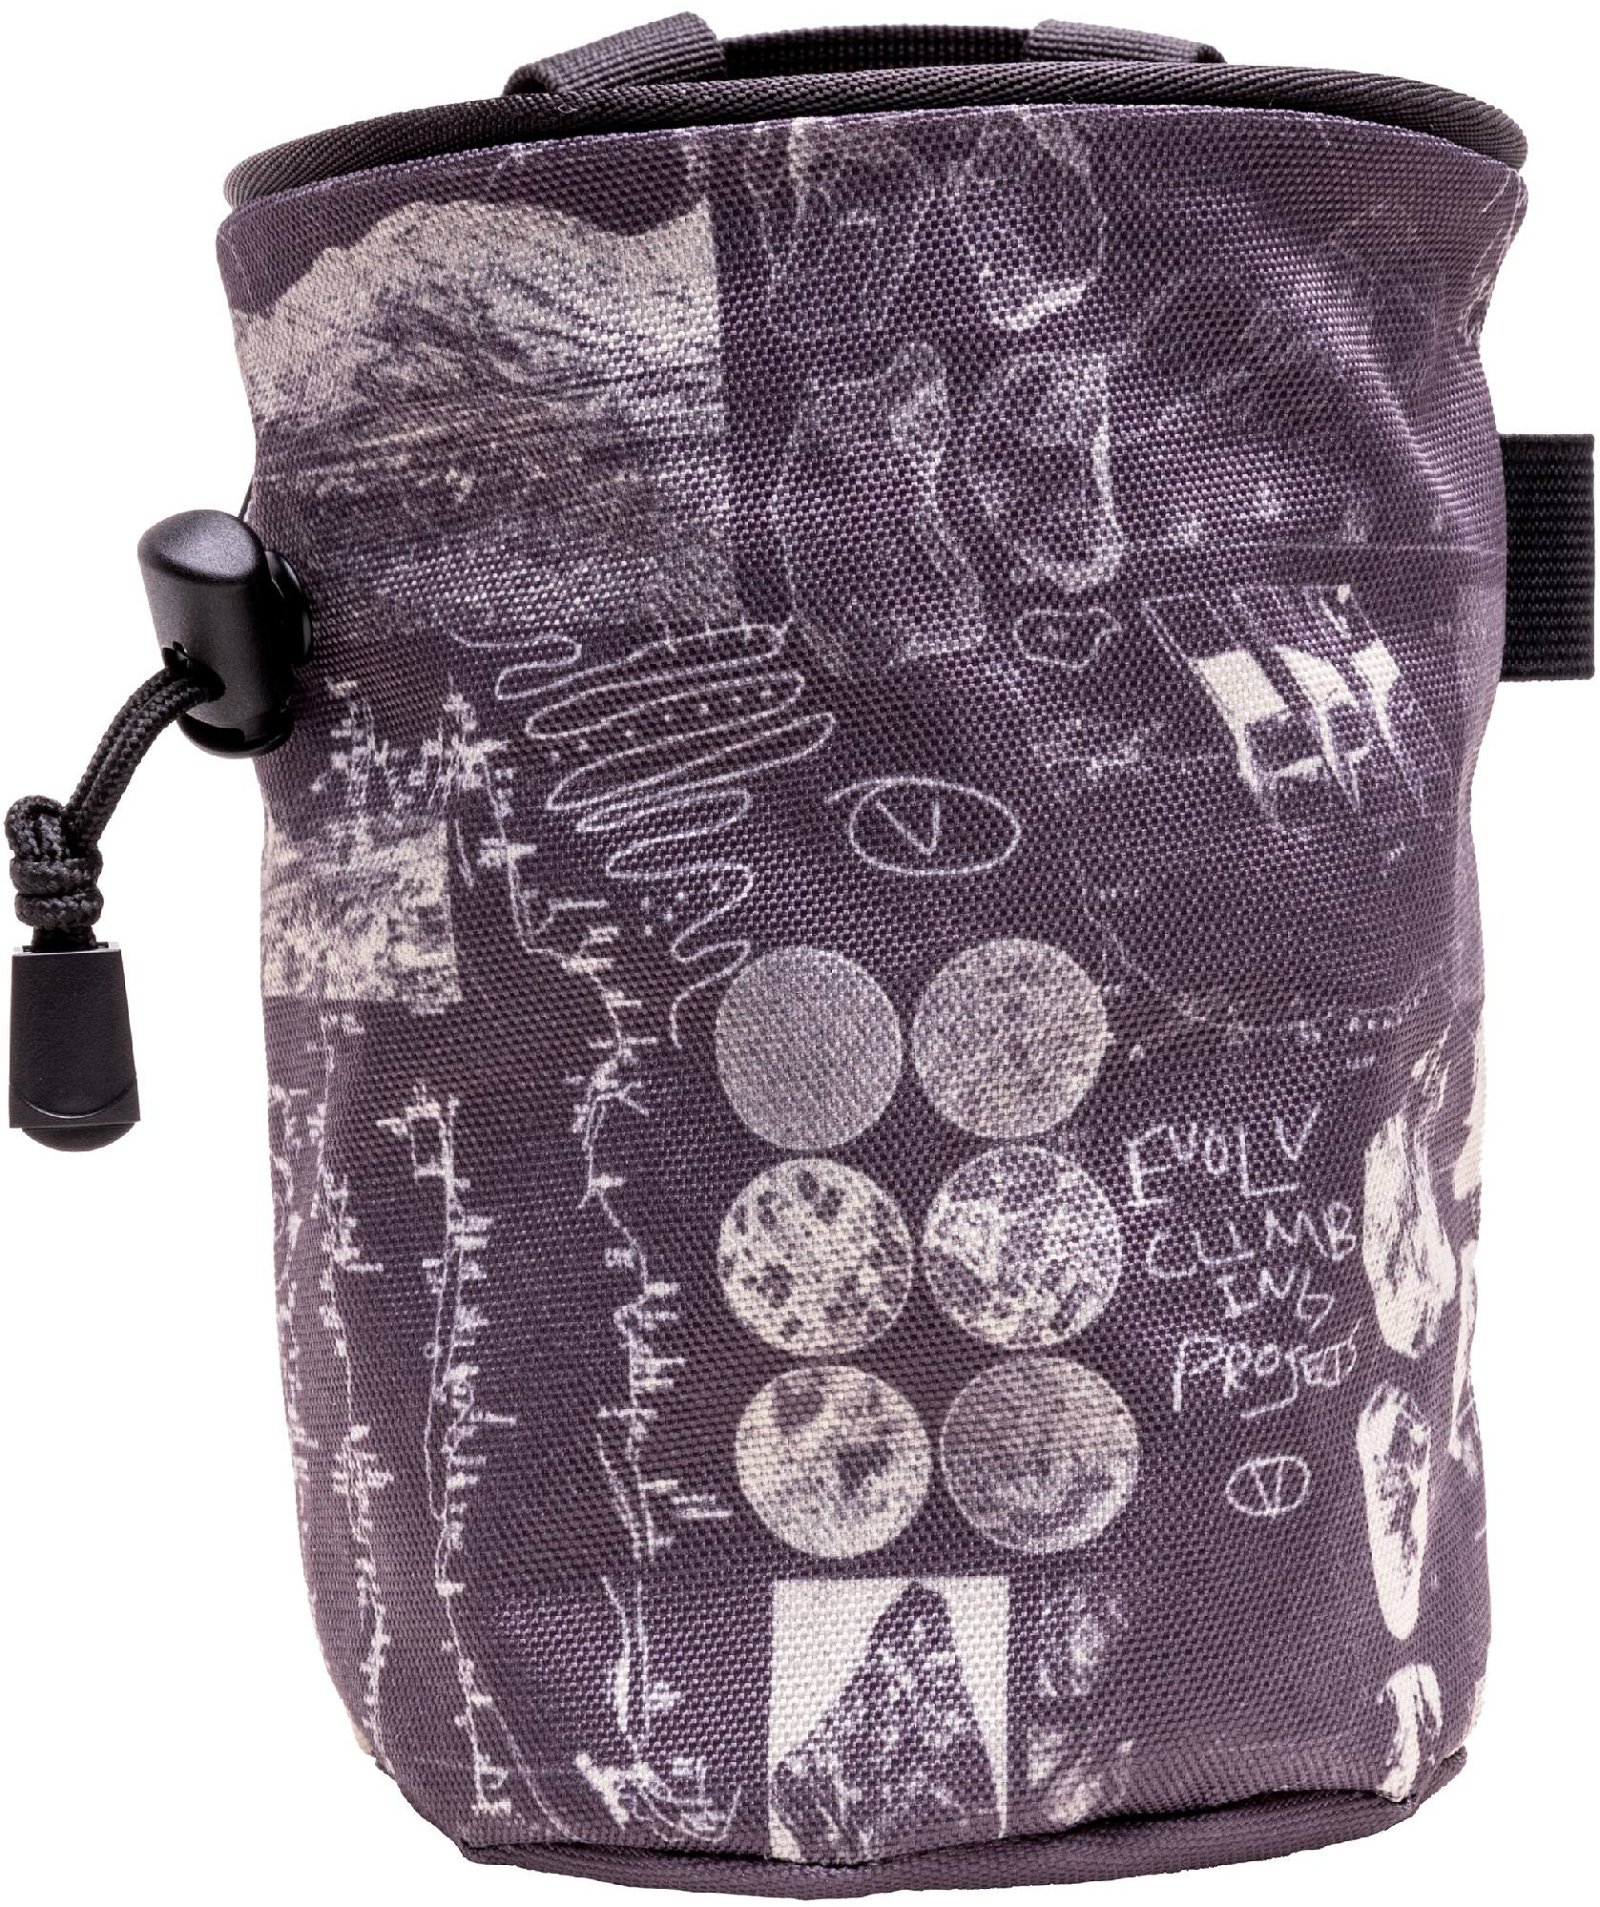 Evolv Collectors chalkbag